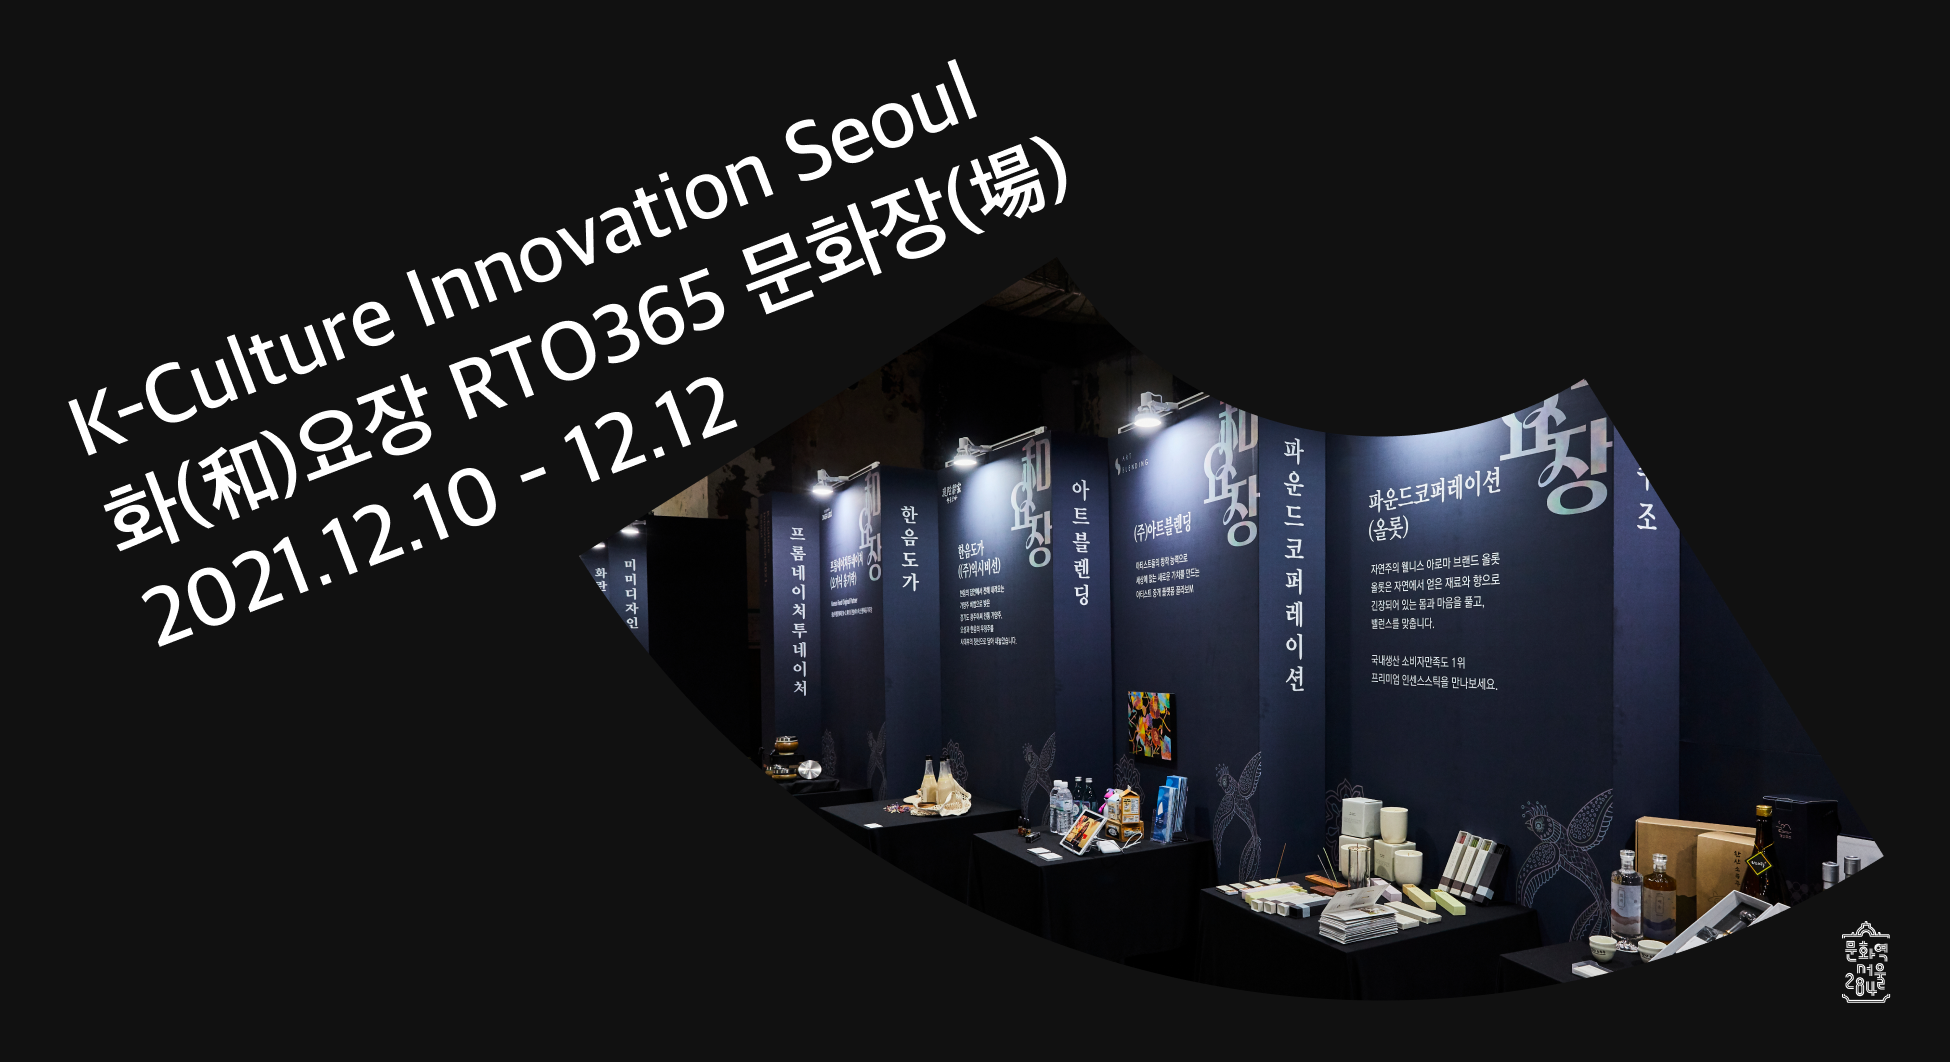 K-Culture Innovation Seoul 화(和)요장 RTO365 문화장(場) 2021.12.10 - 12.12